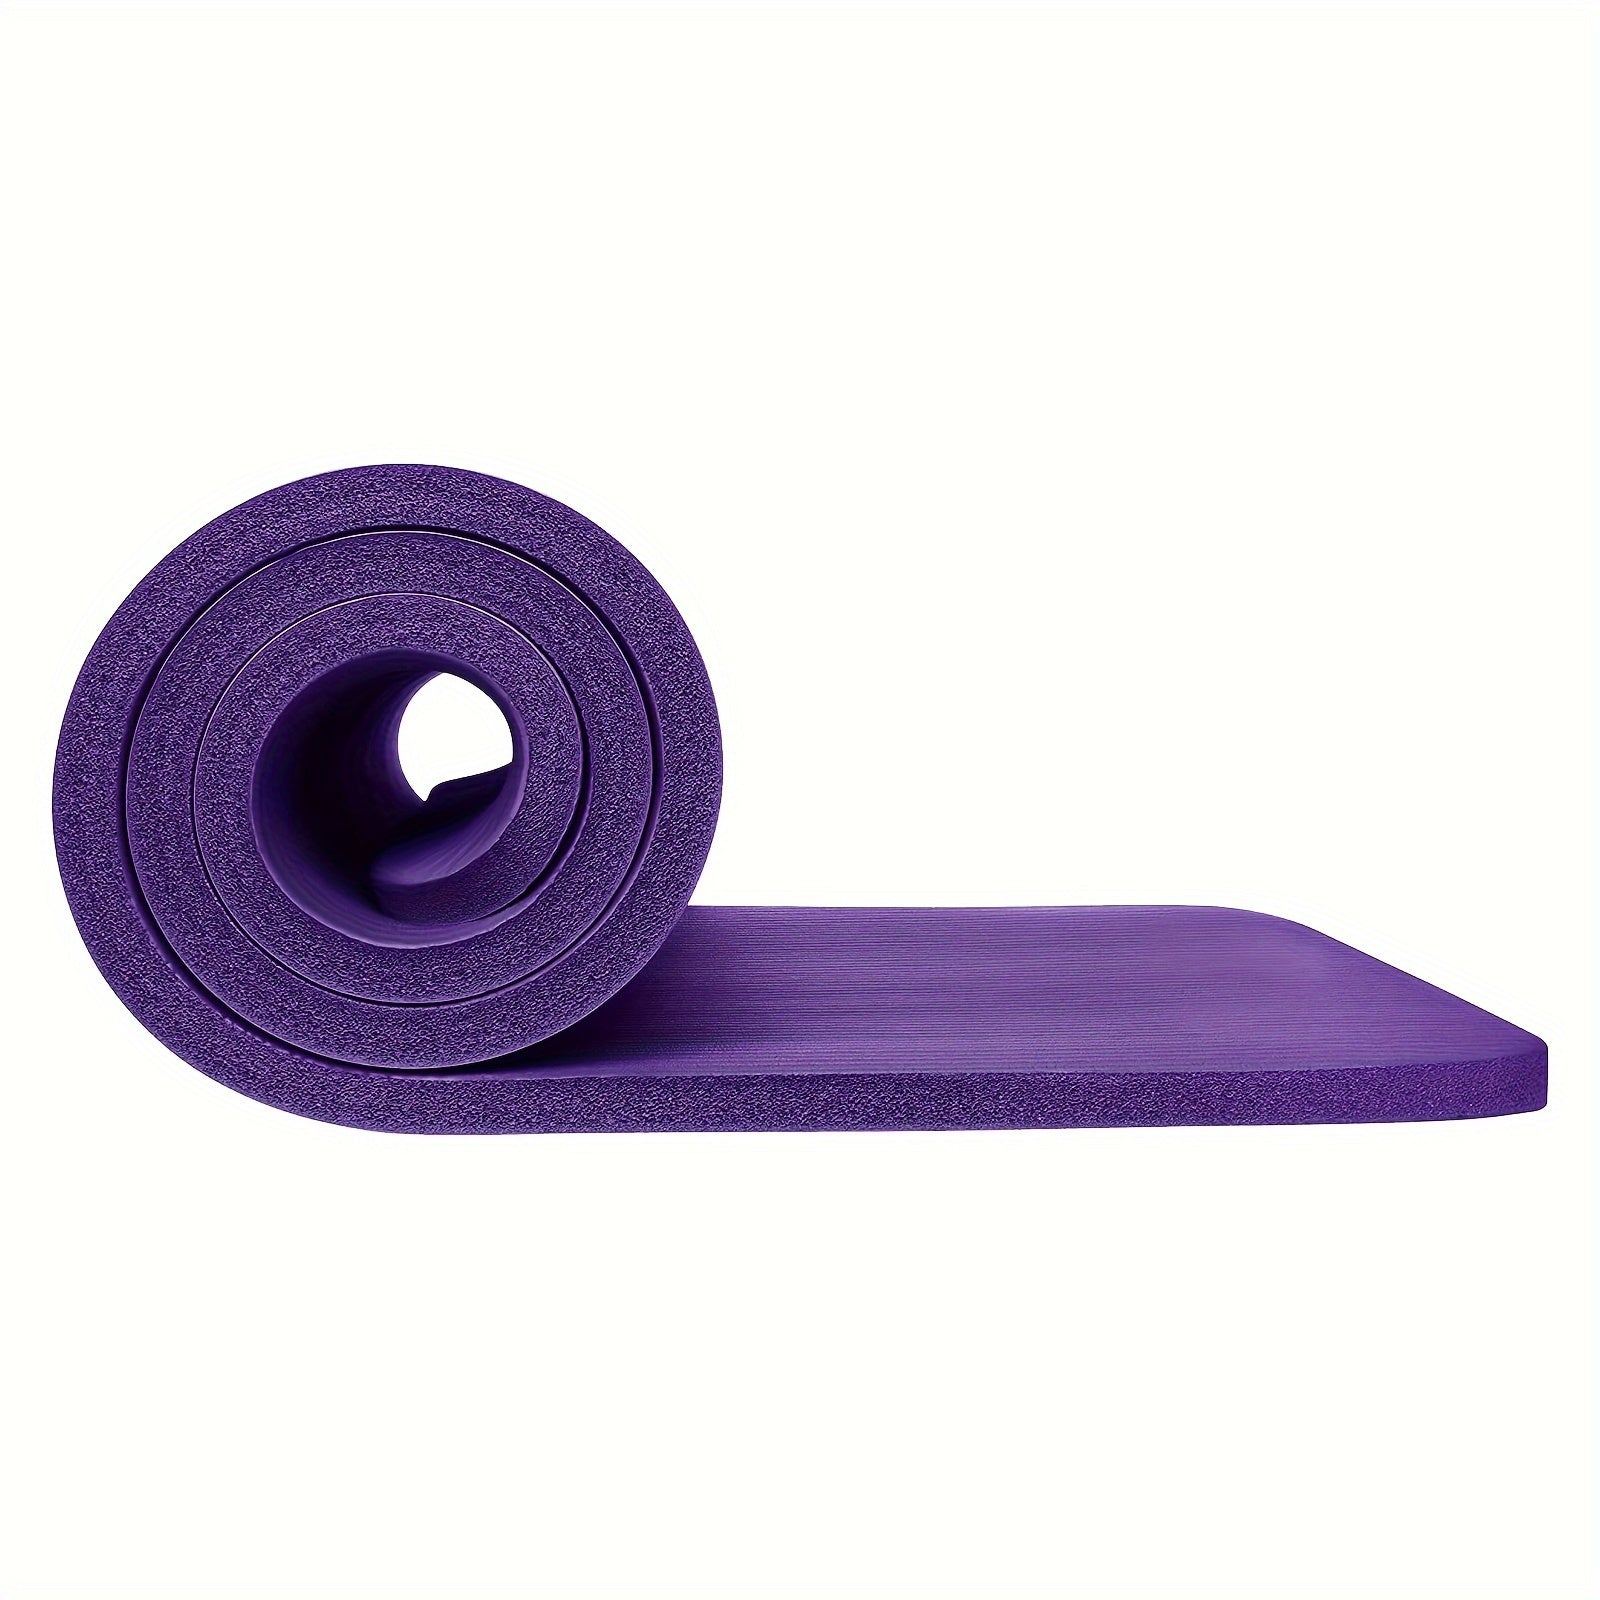 1 pc Purple High Density Yoga Mat /Pilates Exercise Mat Non Slip